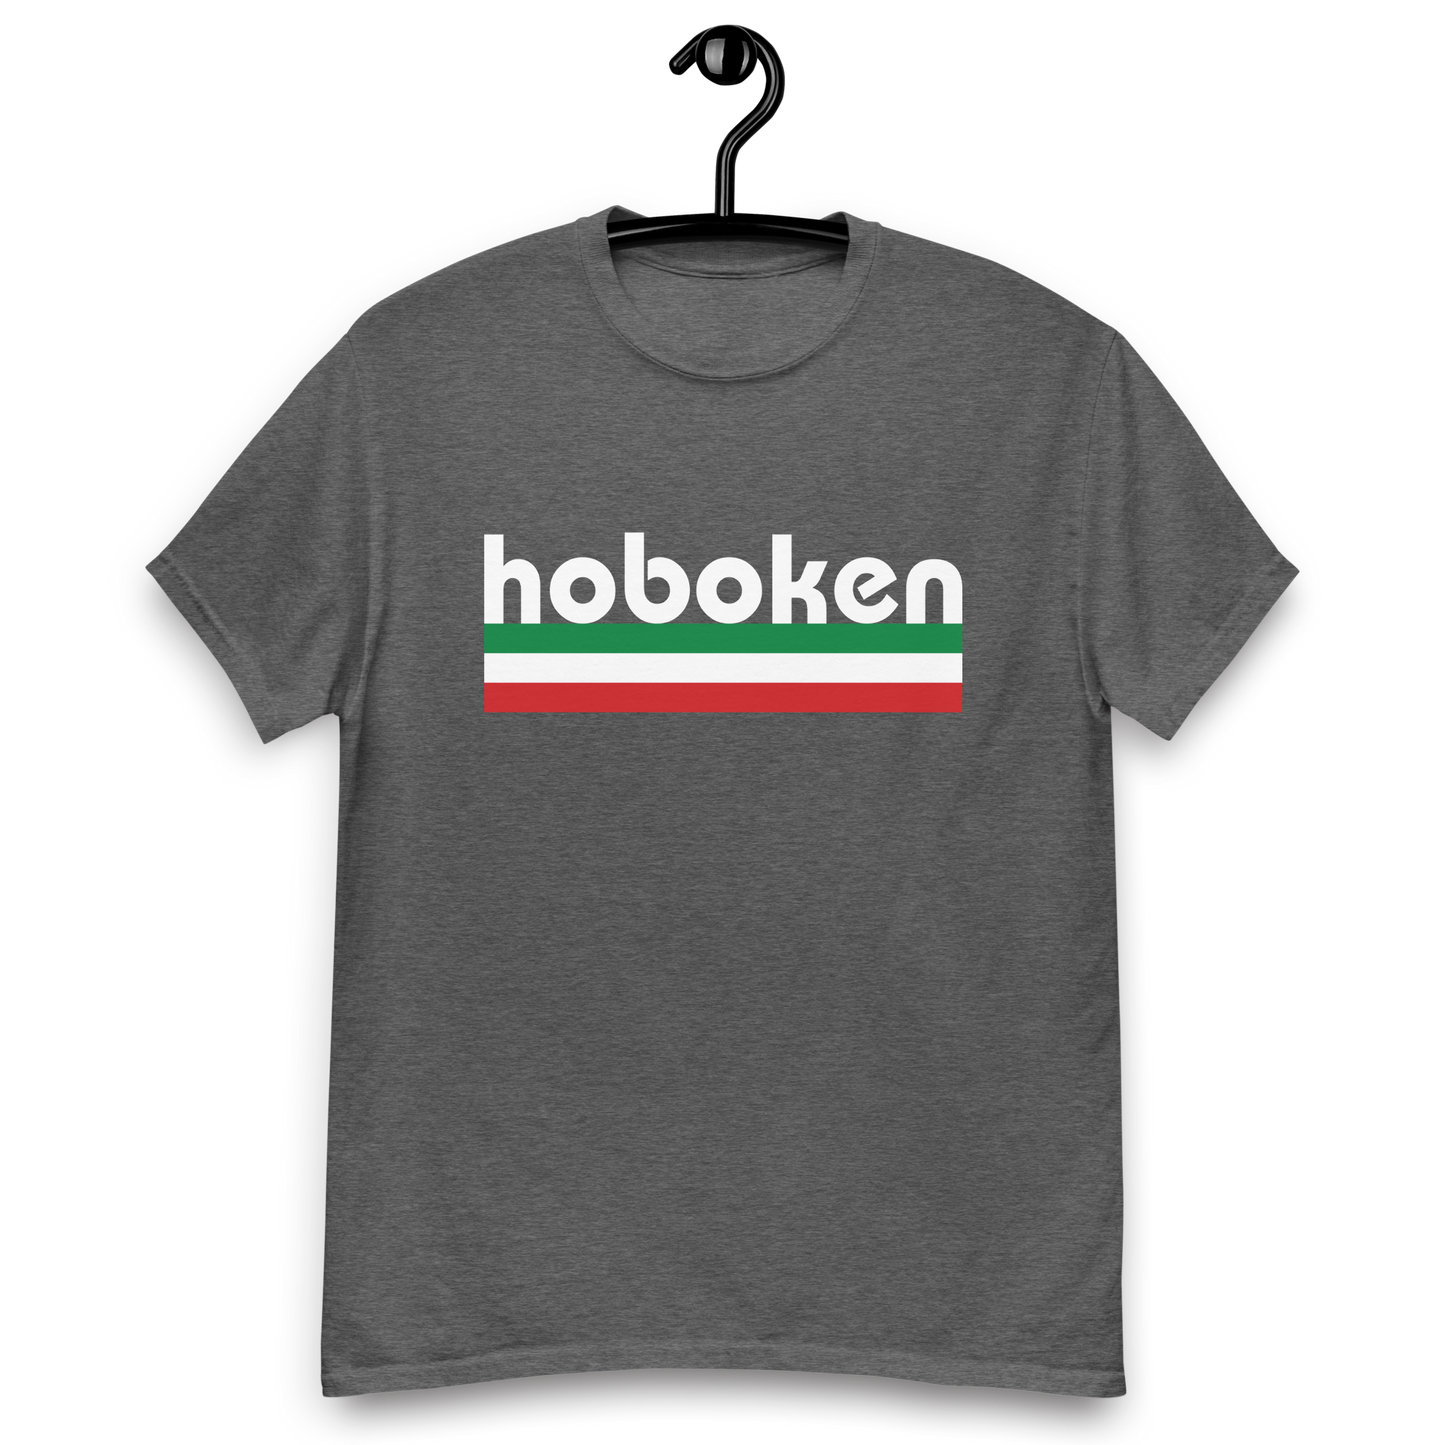 Hoboken Italian Pride T-Shirt - Vintage Flag Tee for Hoboken Italians